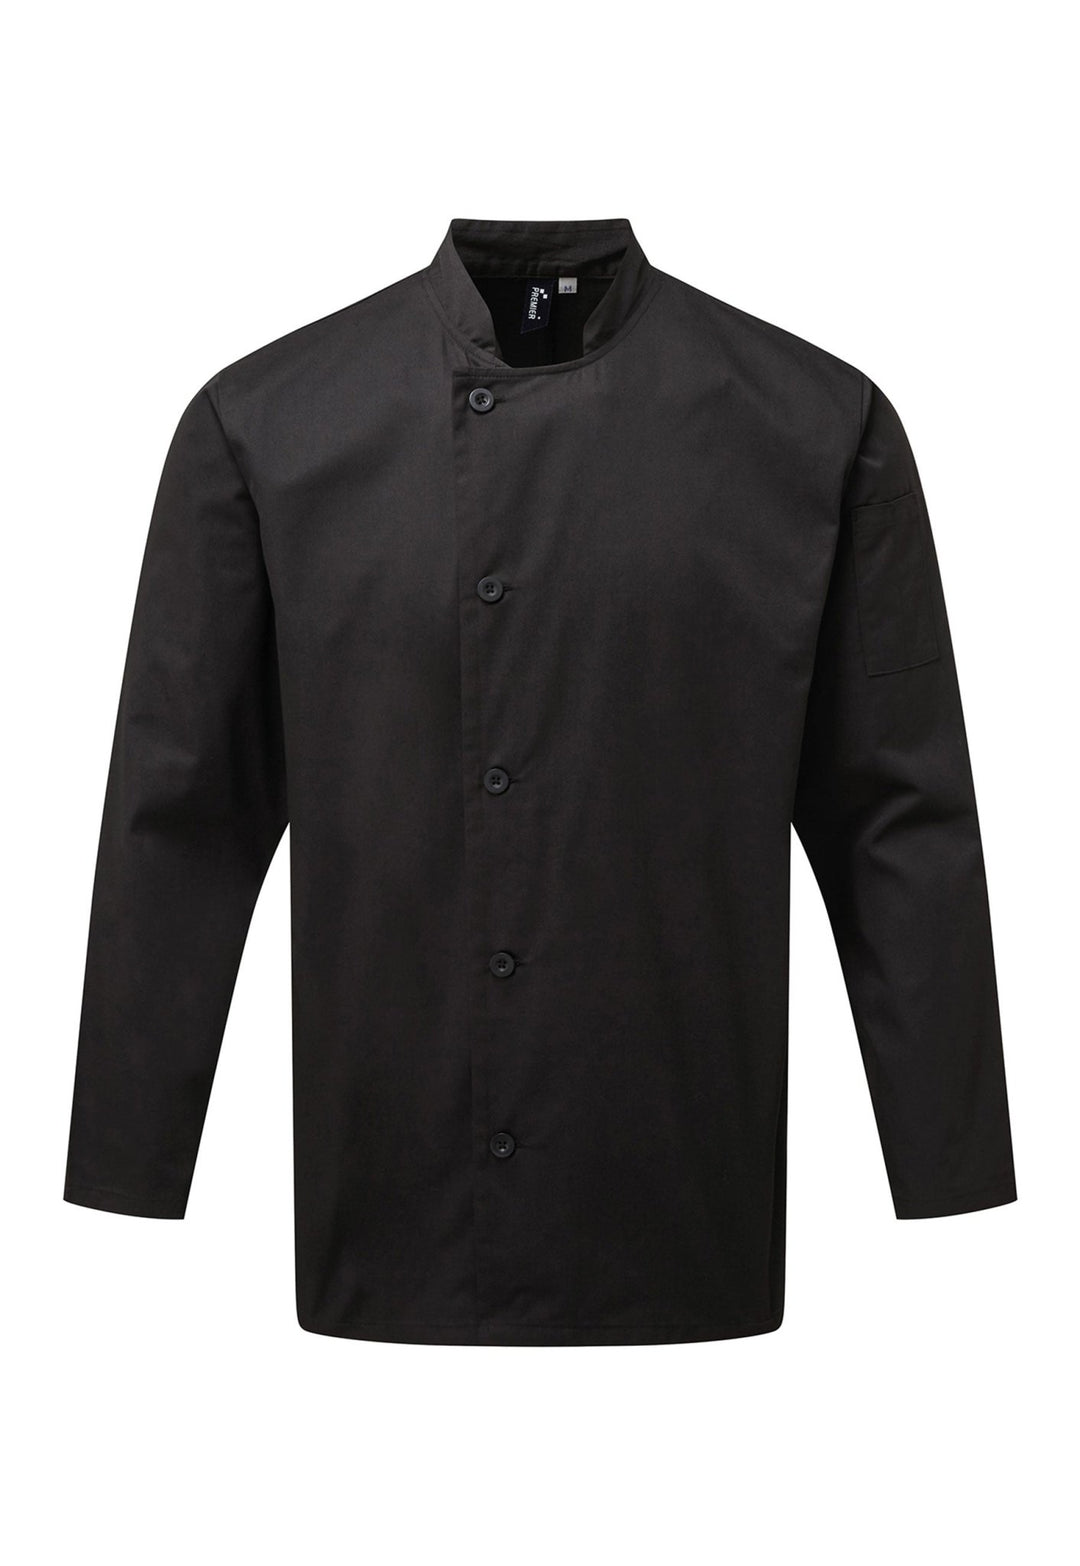 PR901 - Chef's Essential Long Sleeve Jacket - The Work Uniform Company